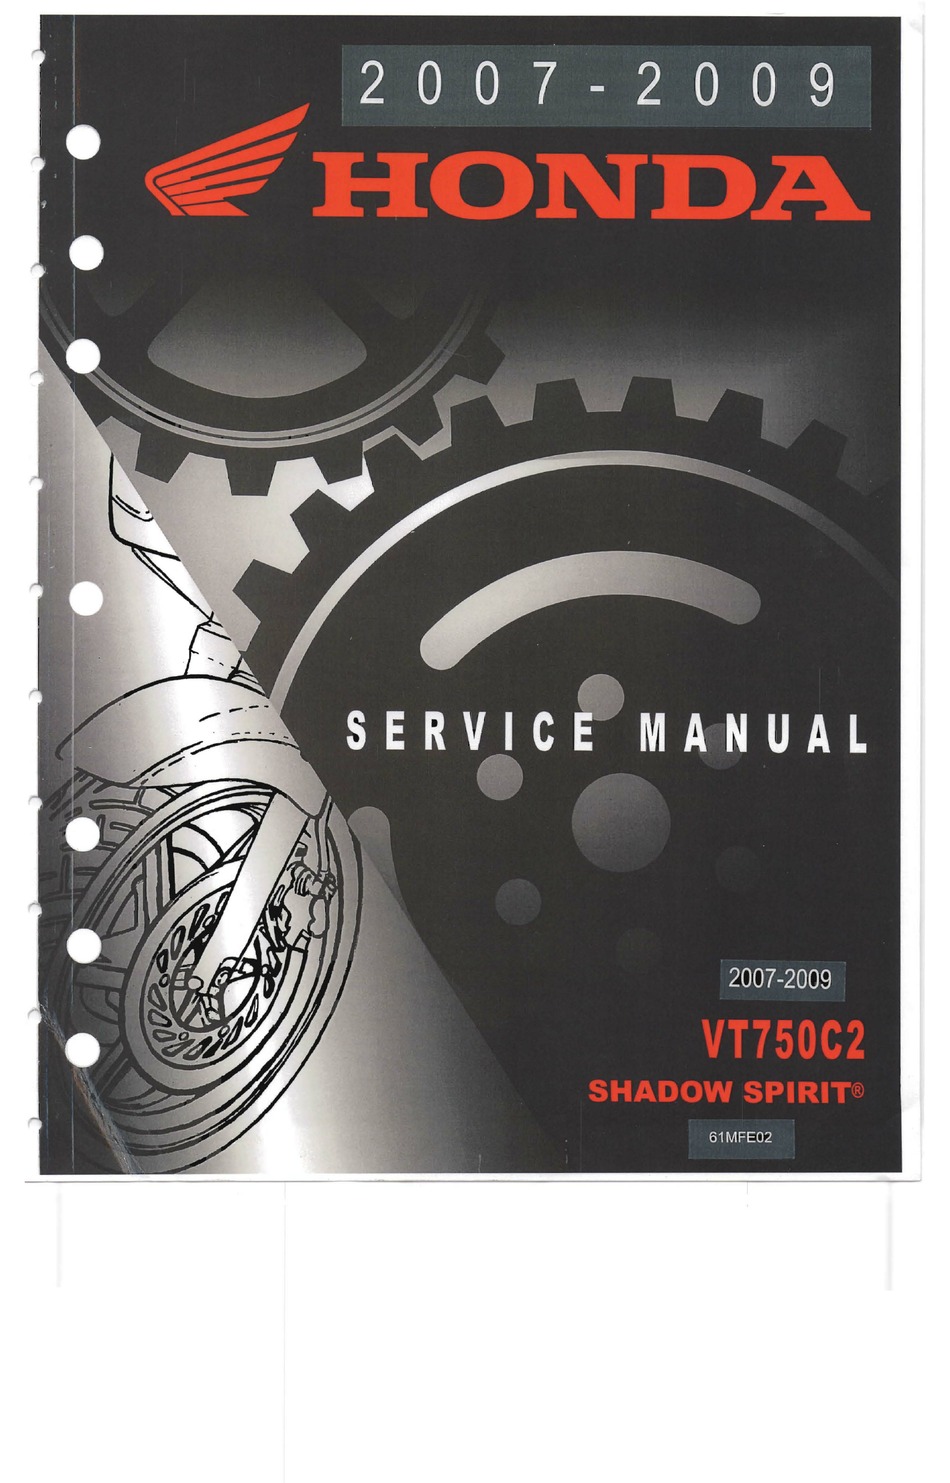 HONDA VT750C2 SHADOW SPIRIT SERVICE MANUAL Pdf Download | ManualsLib